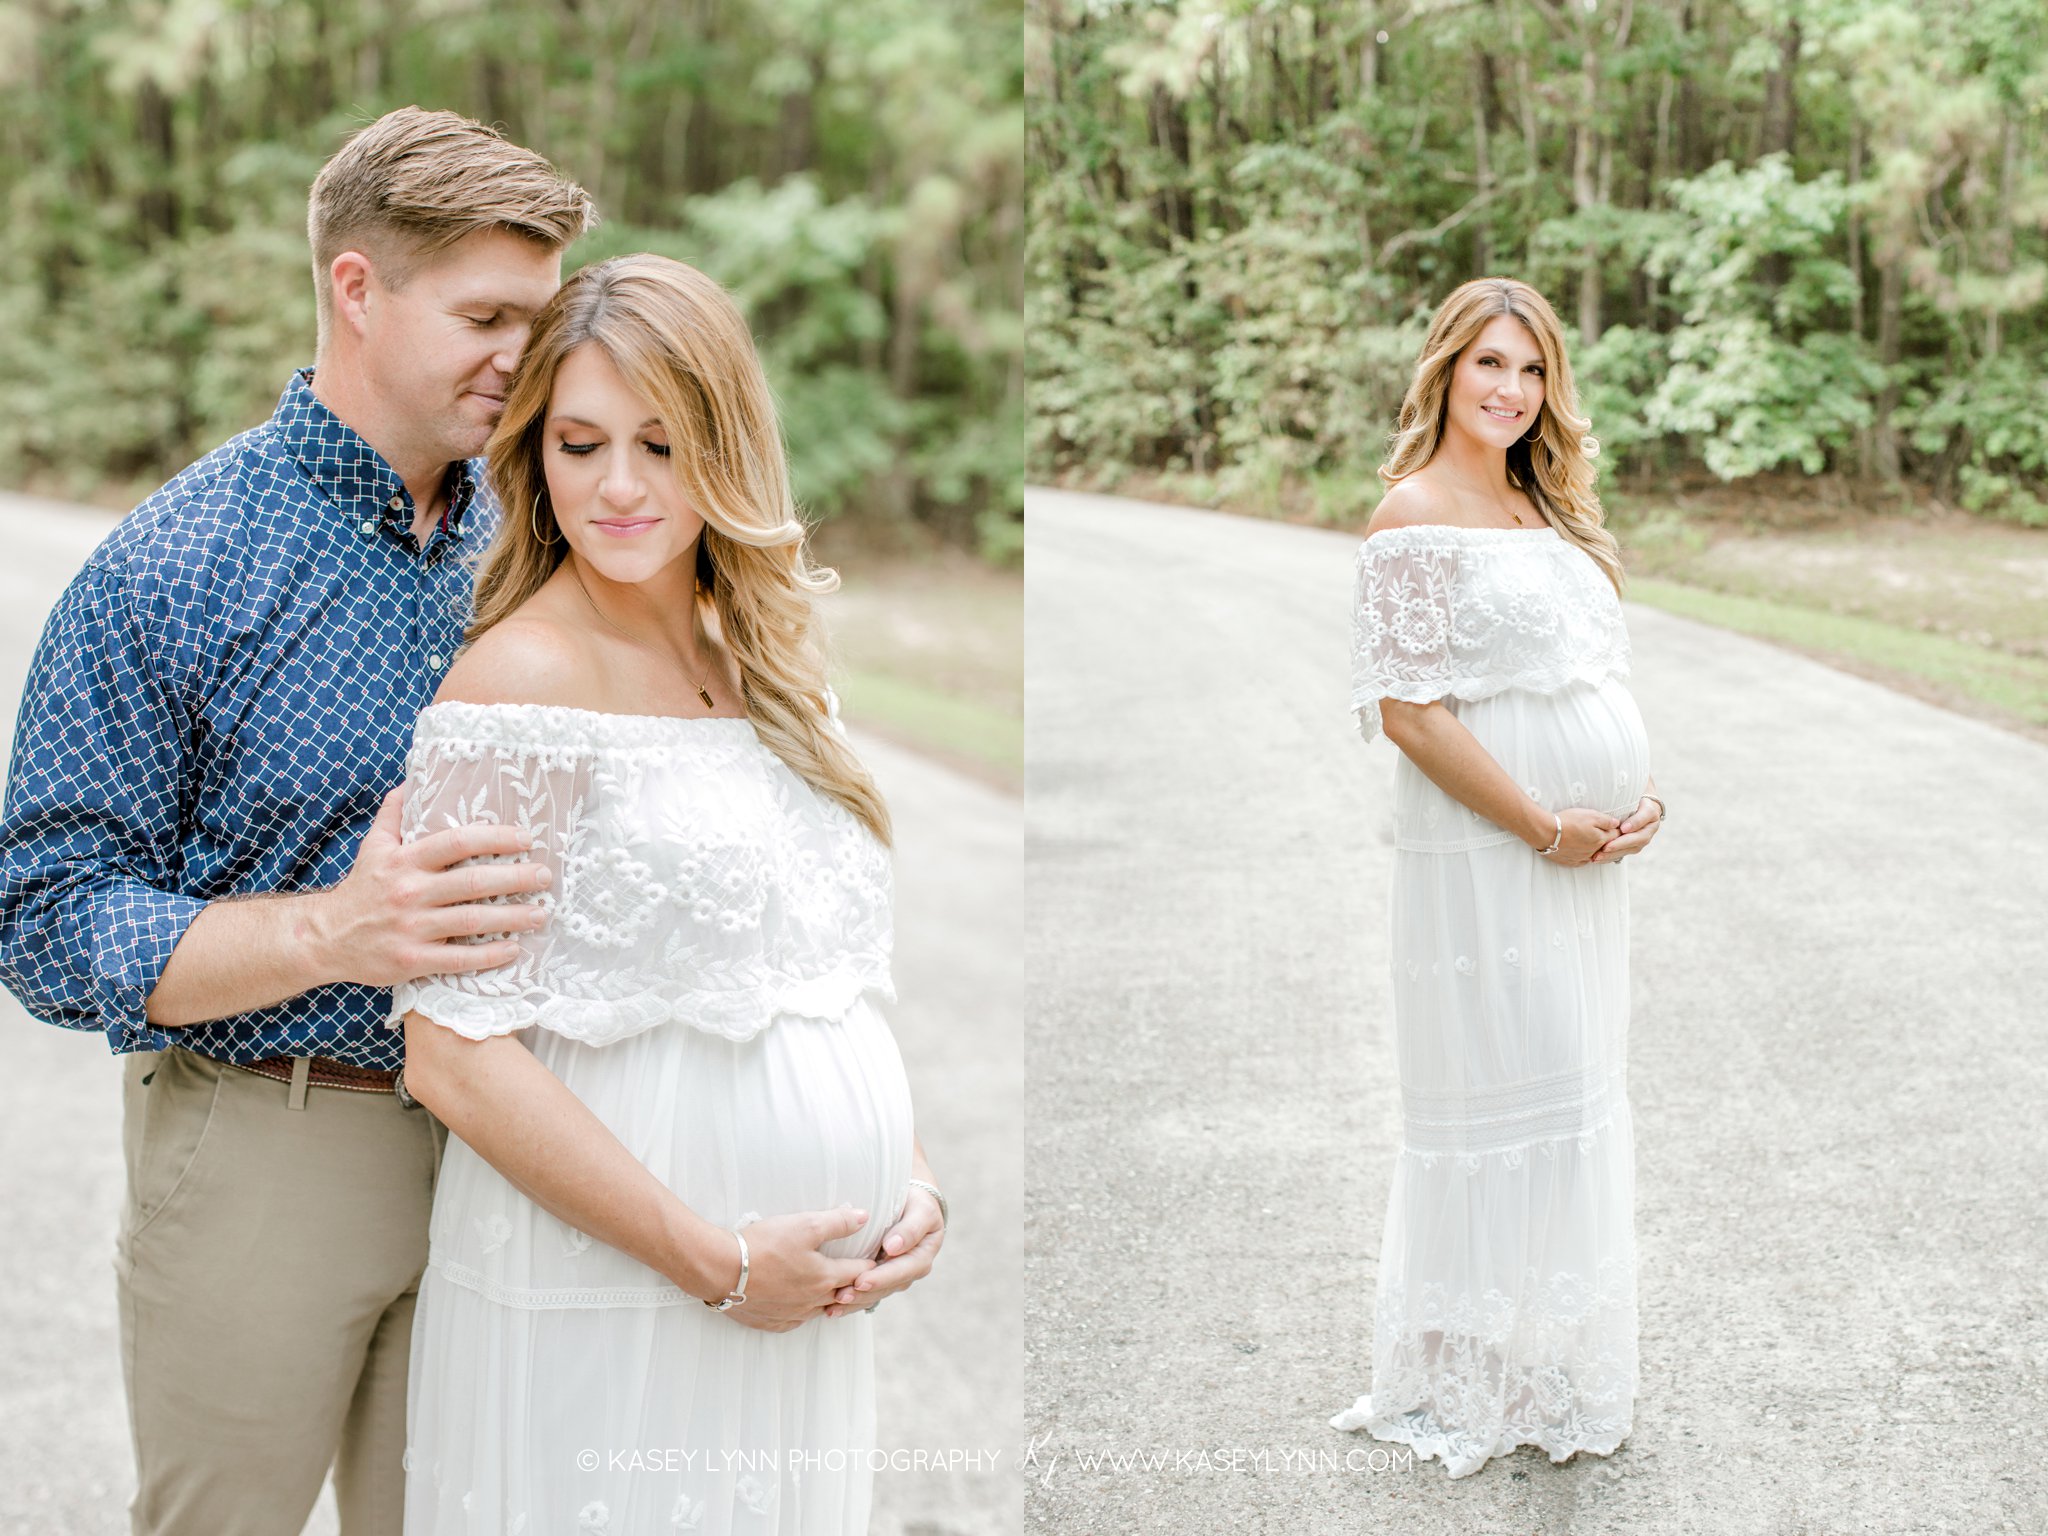 Houston Maternity Photographer / Kasey Lynn Photography